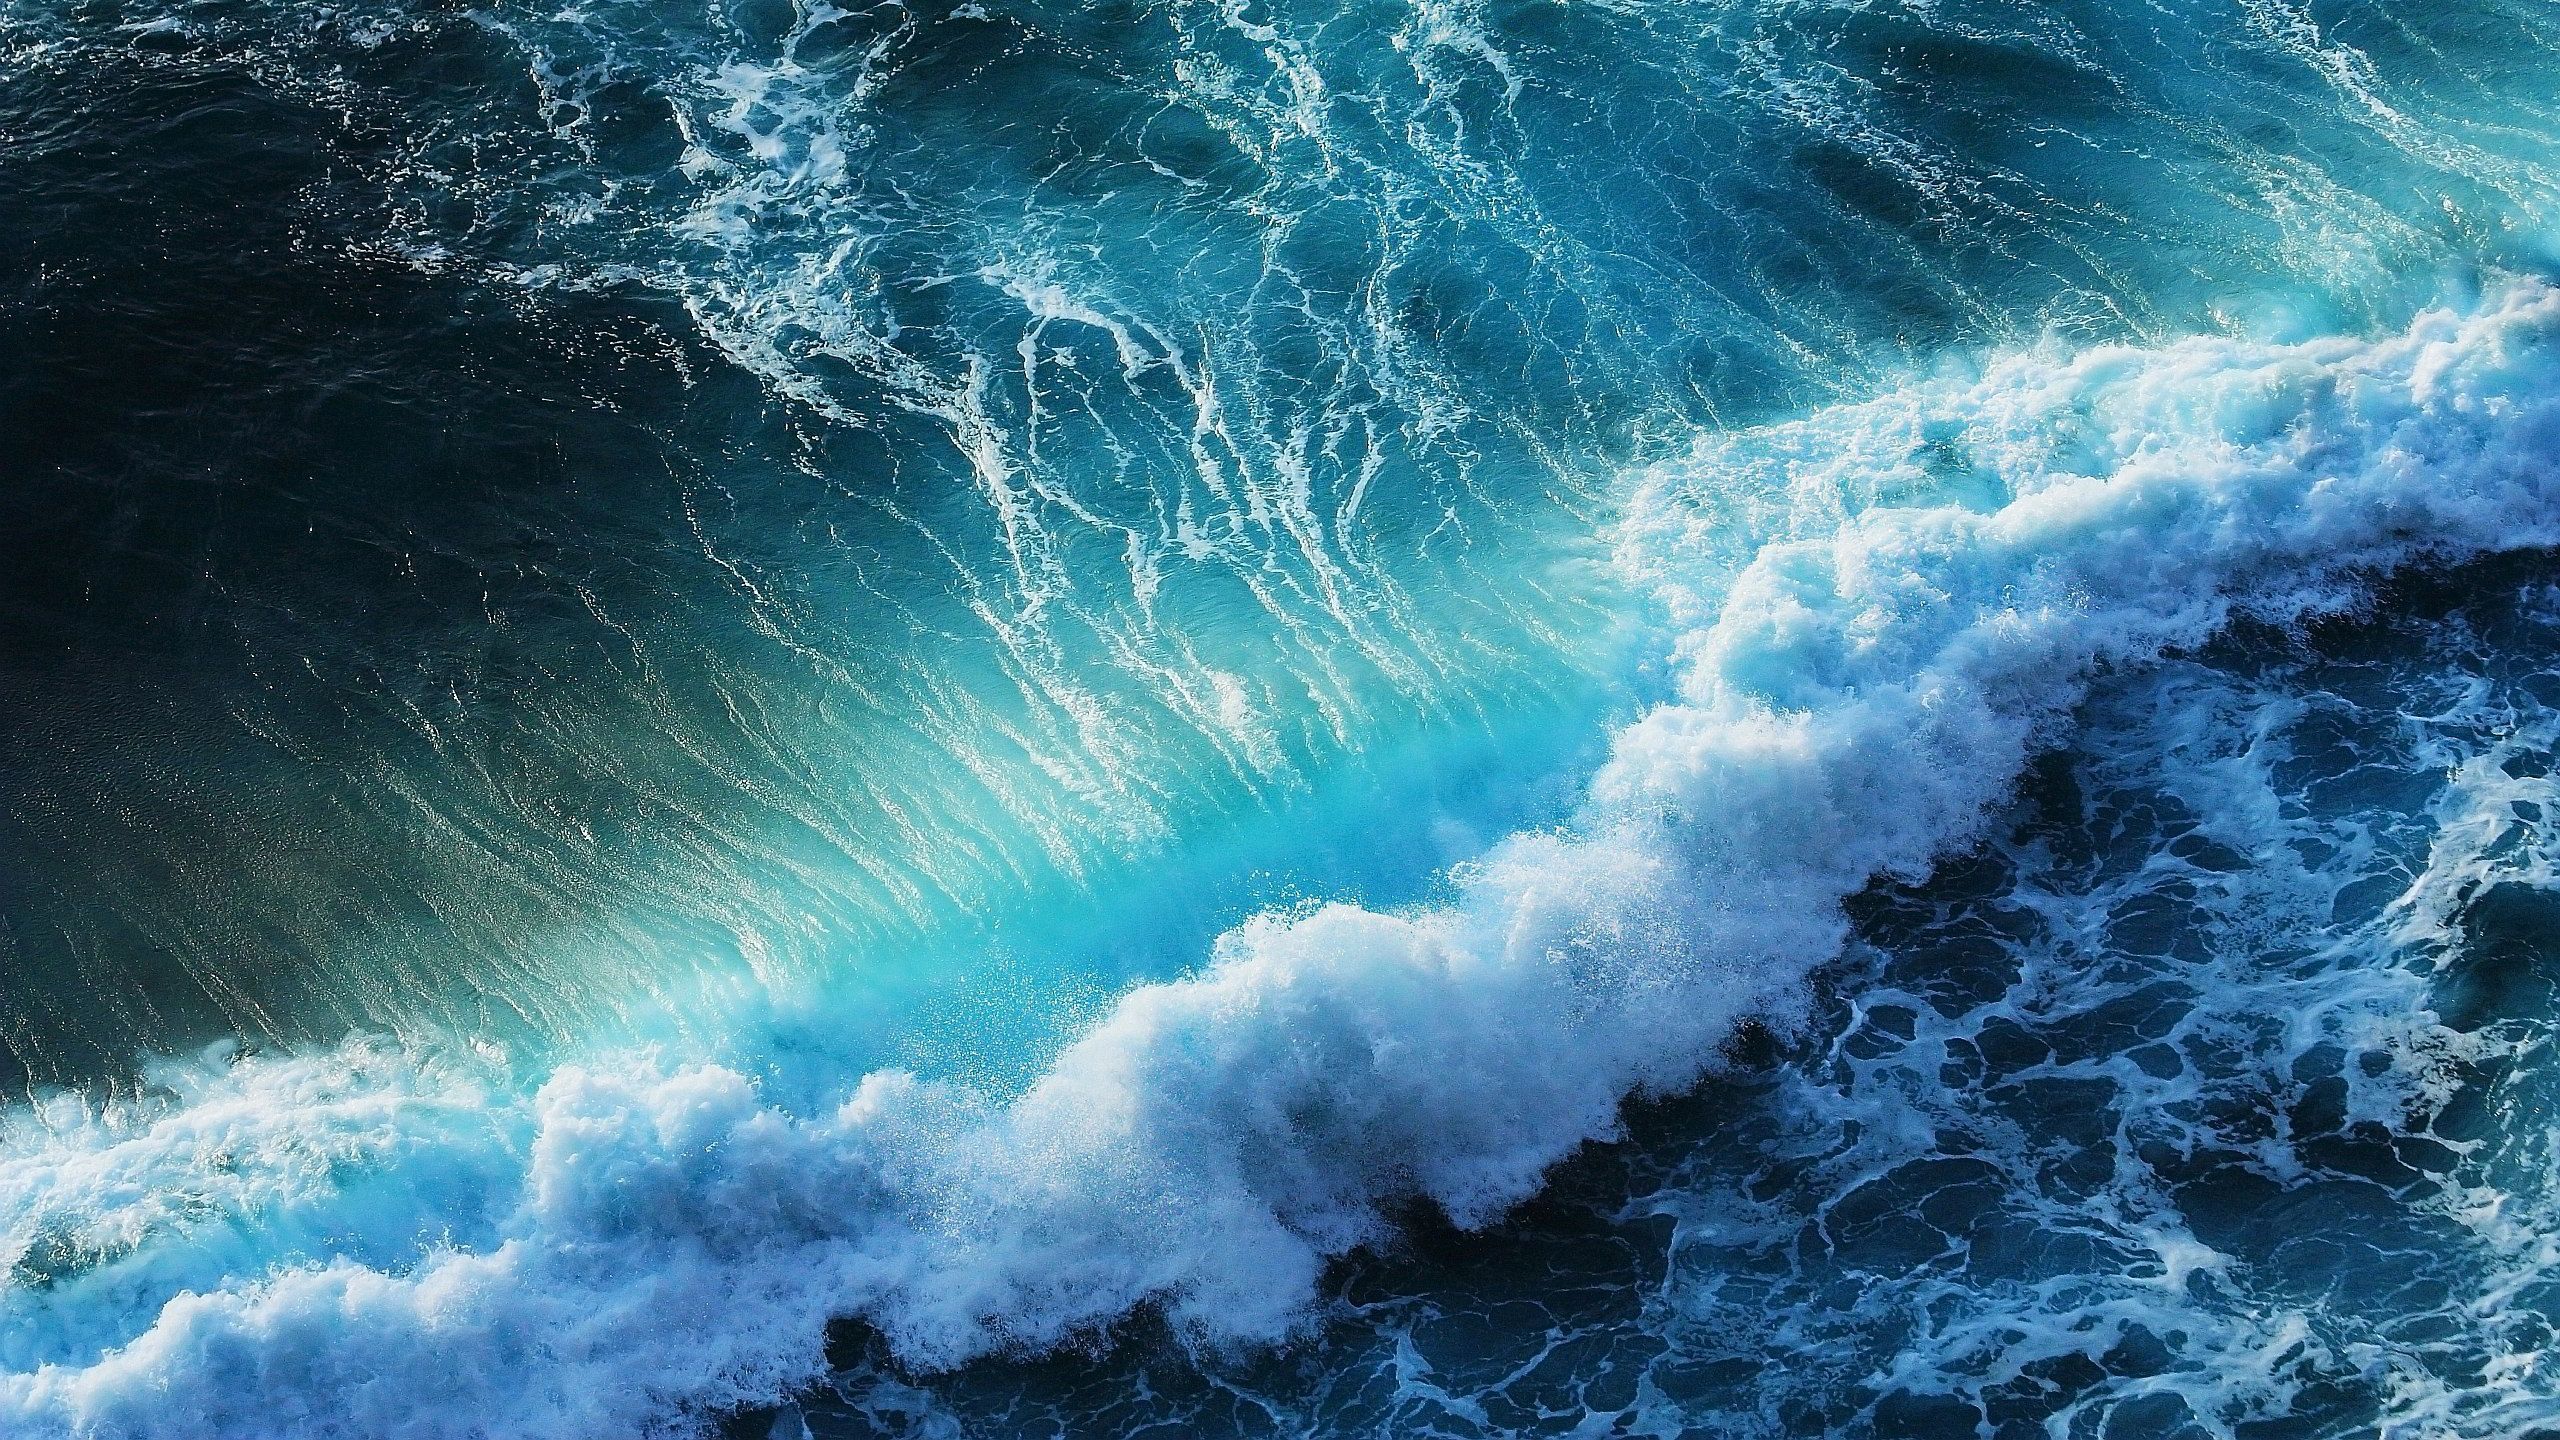 2560x1440 Sea wave Fondos de pantalla | #RockxOnTour | Fondo de pantalla de olas, mar